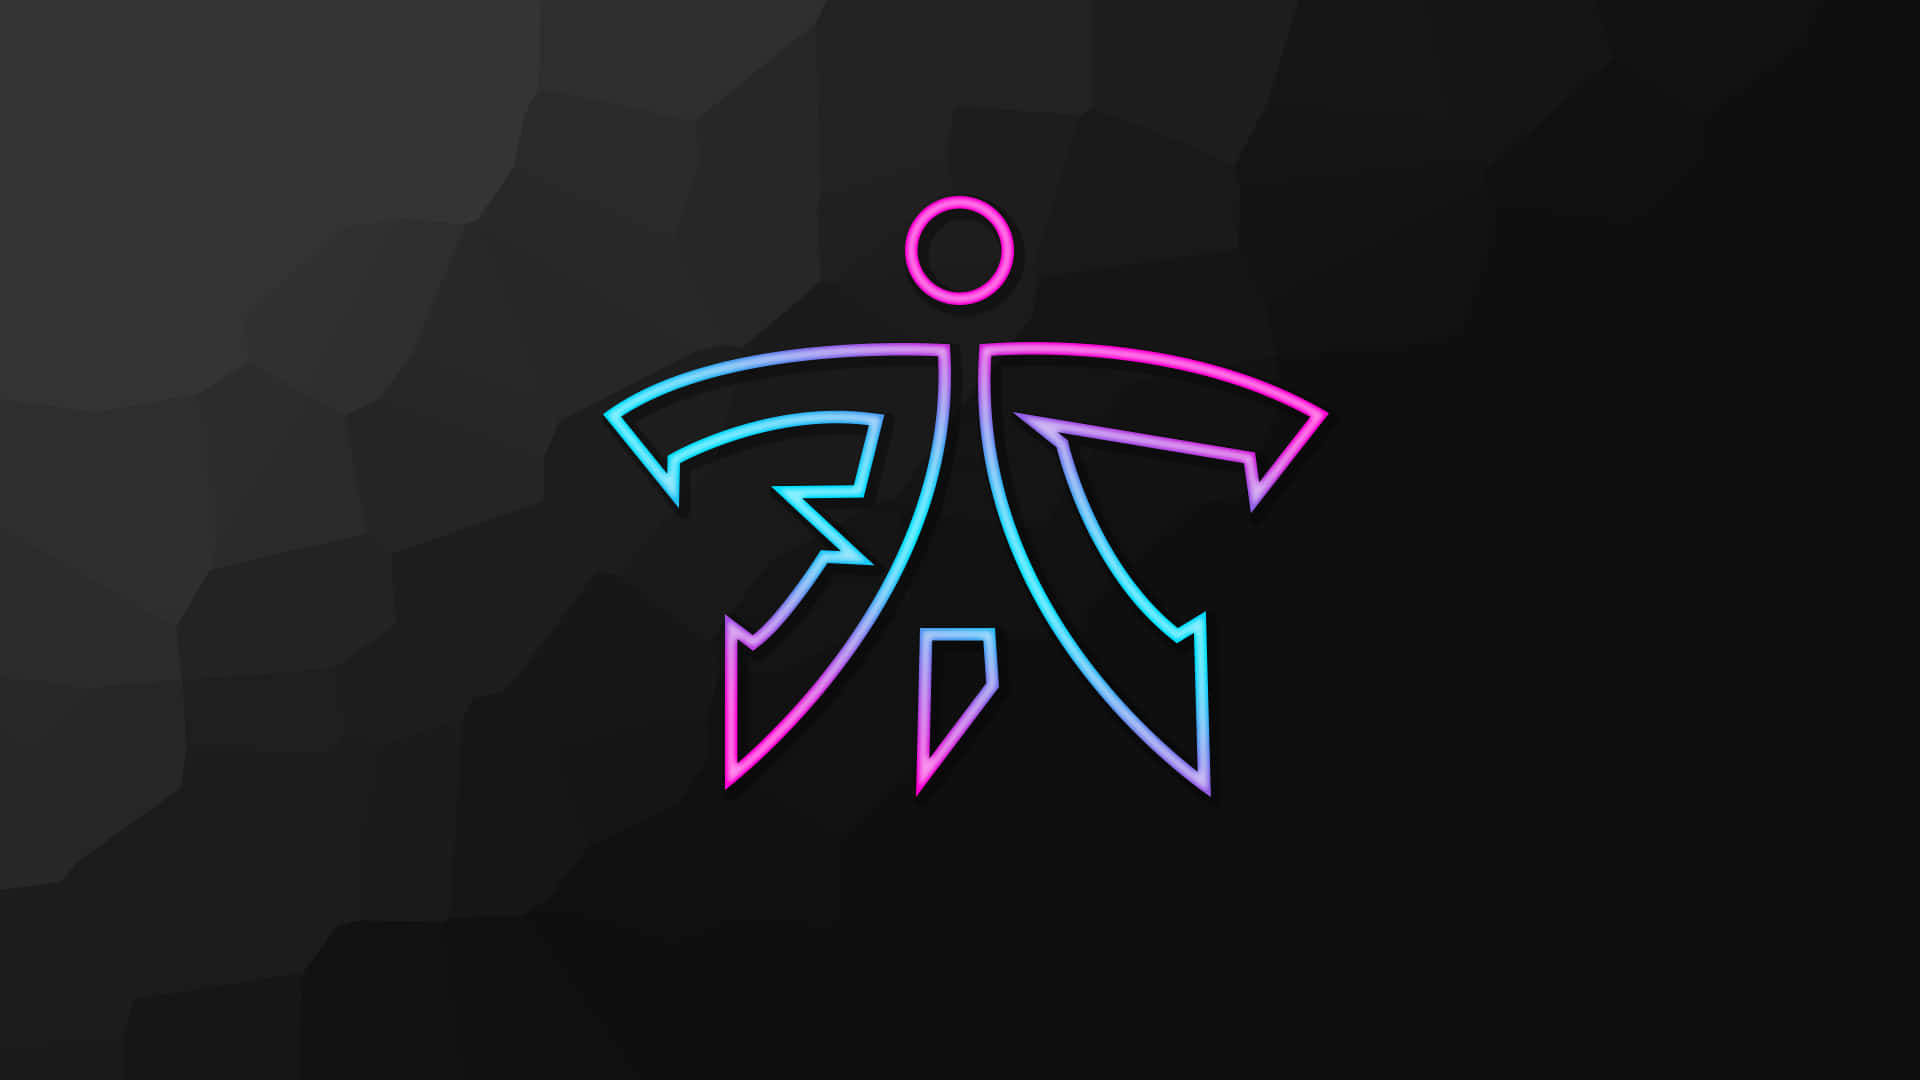 Team Fnatic Glowing Neon Logo Wallpaper